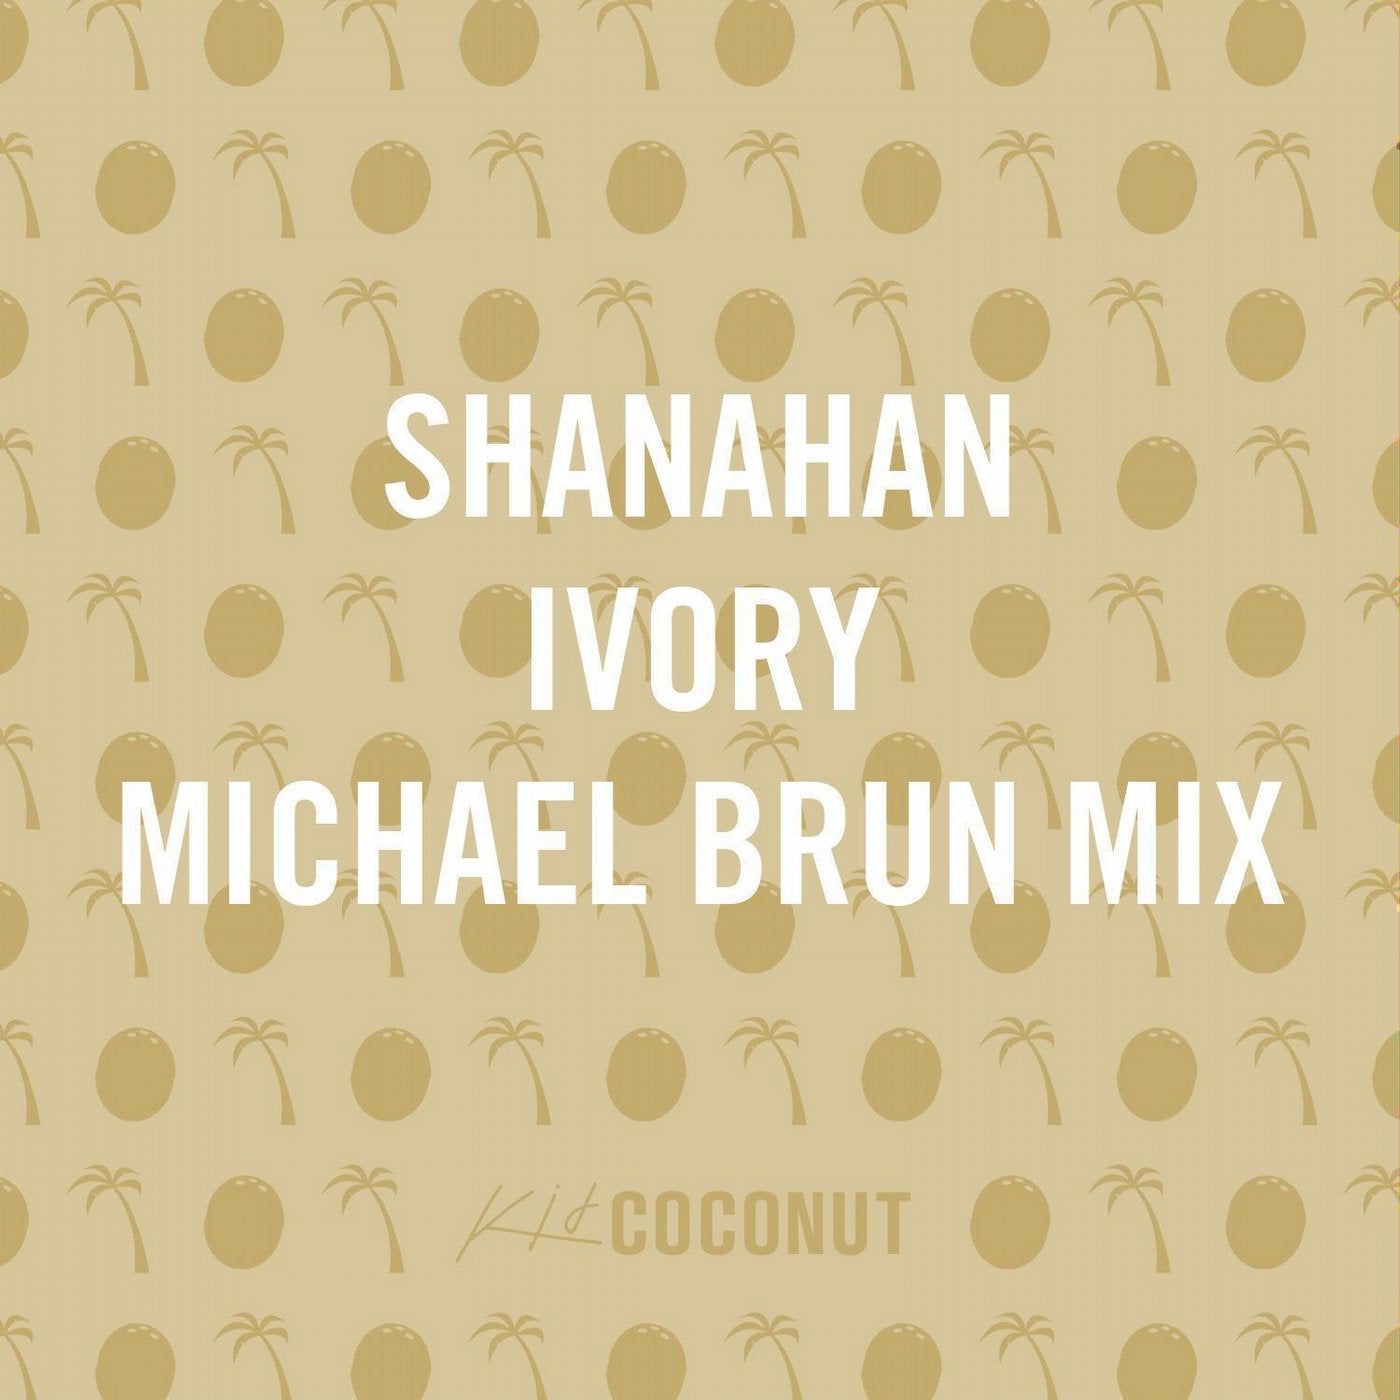 Ivory (Michael Brun Mix)